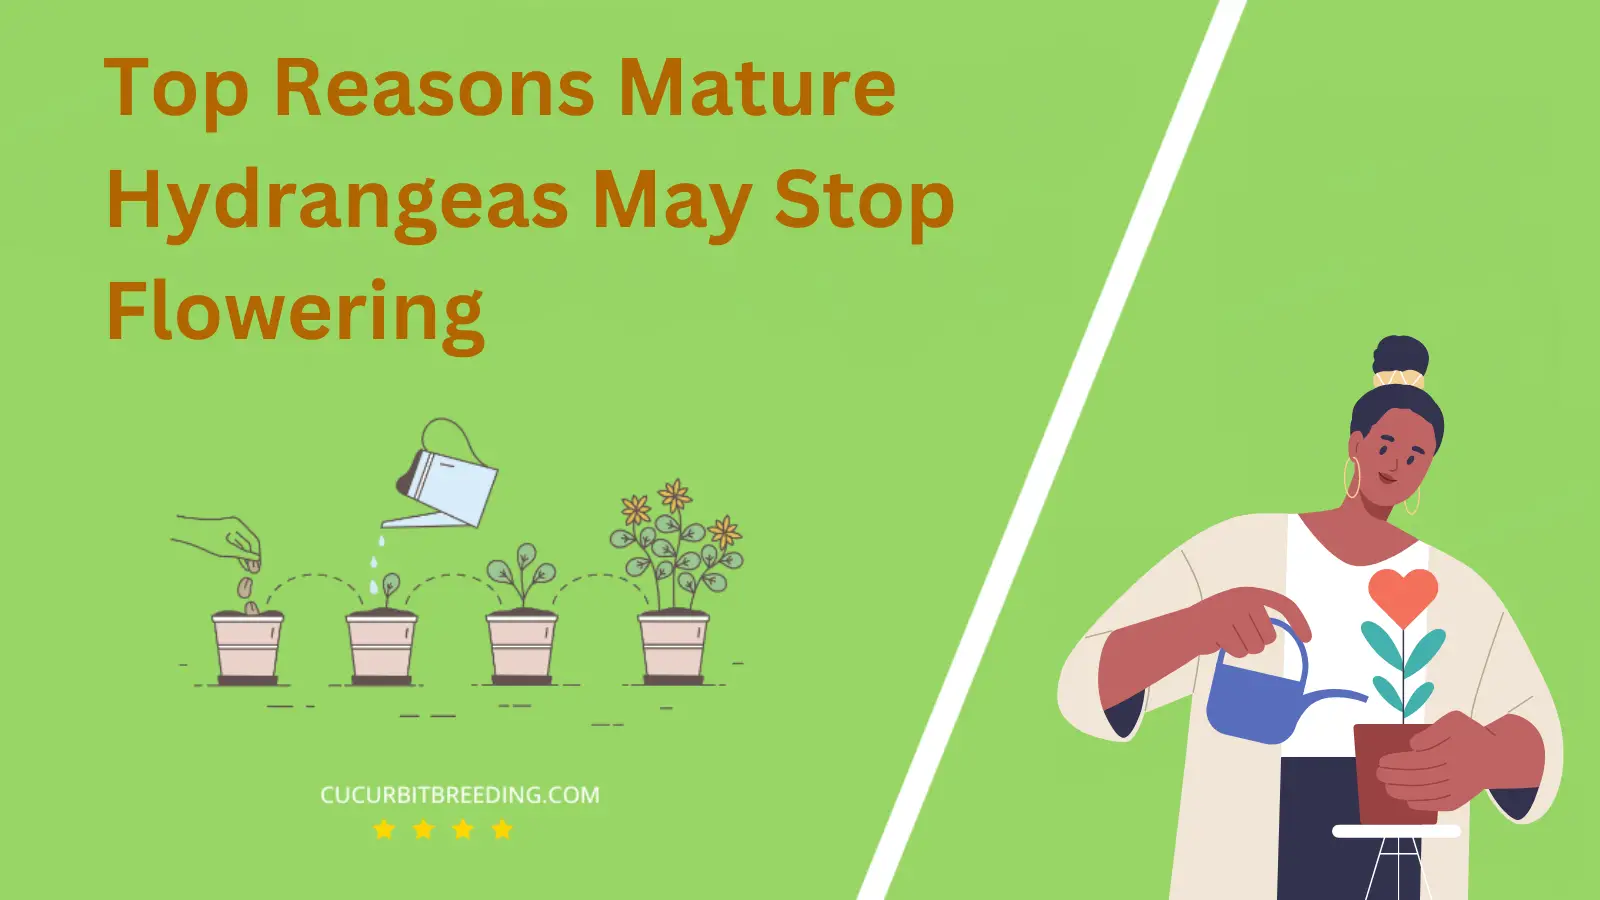 Top Reasons Mature Hydrangeas May Stop Flowering